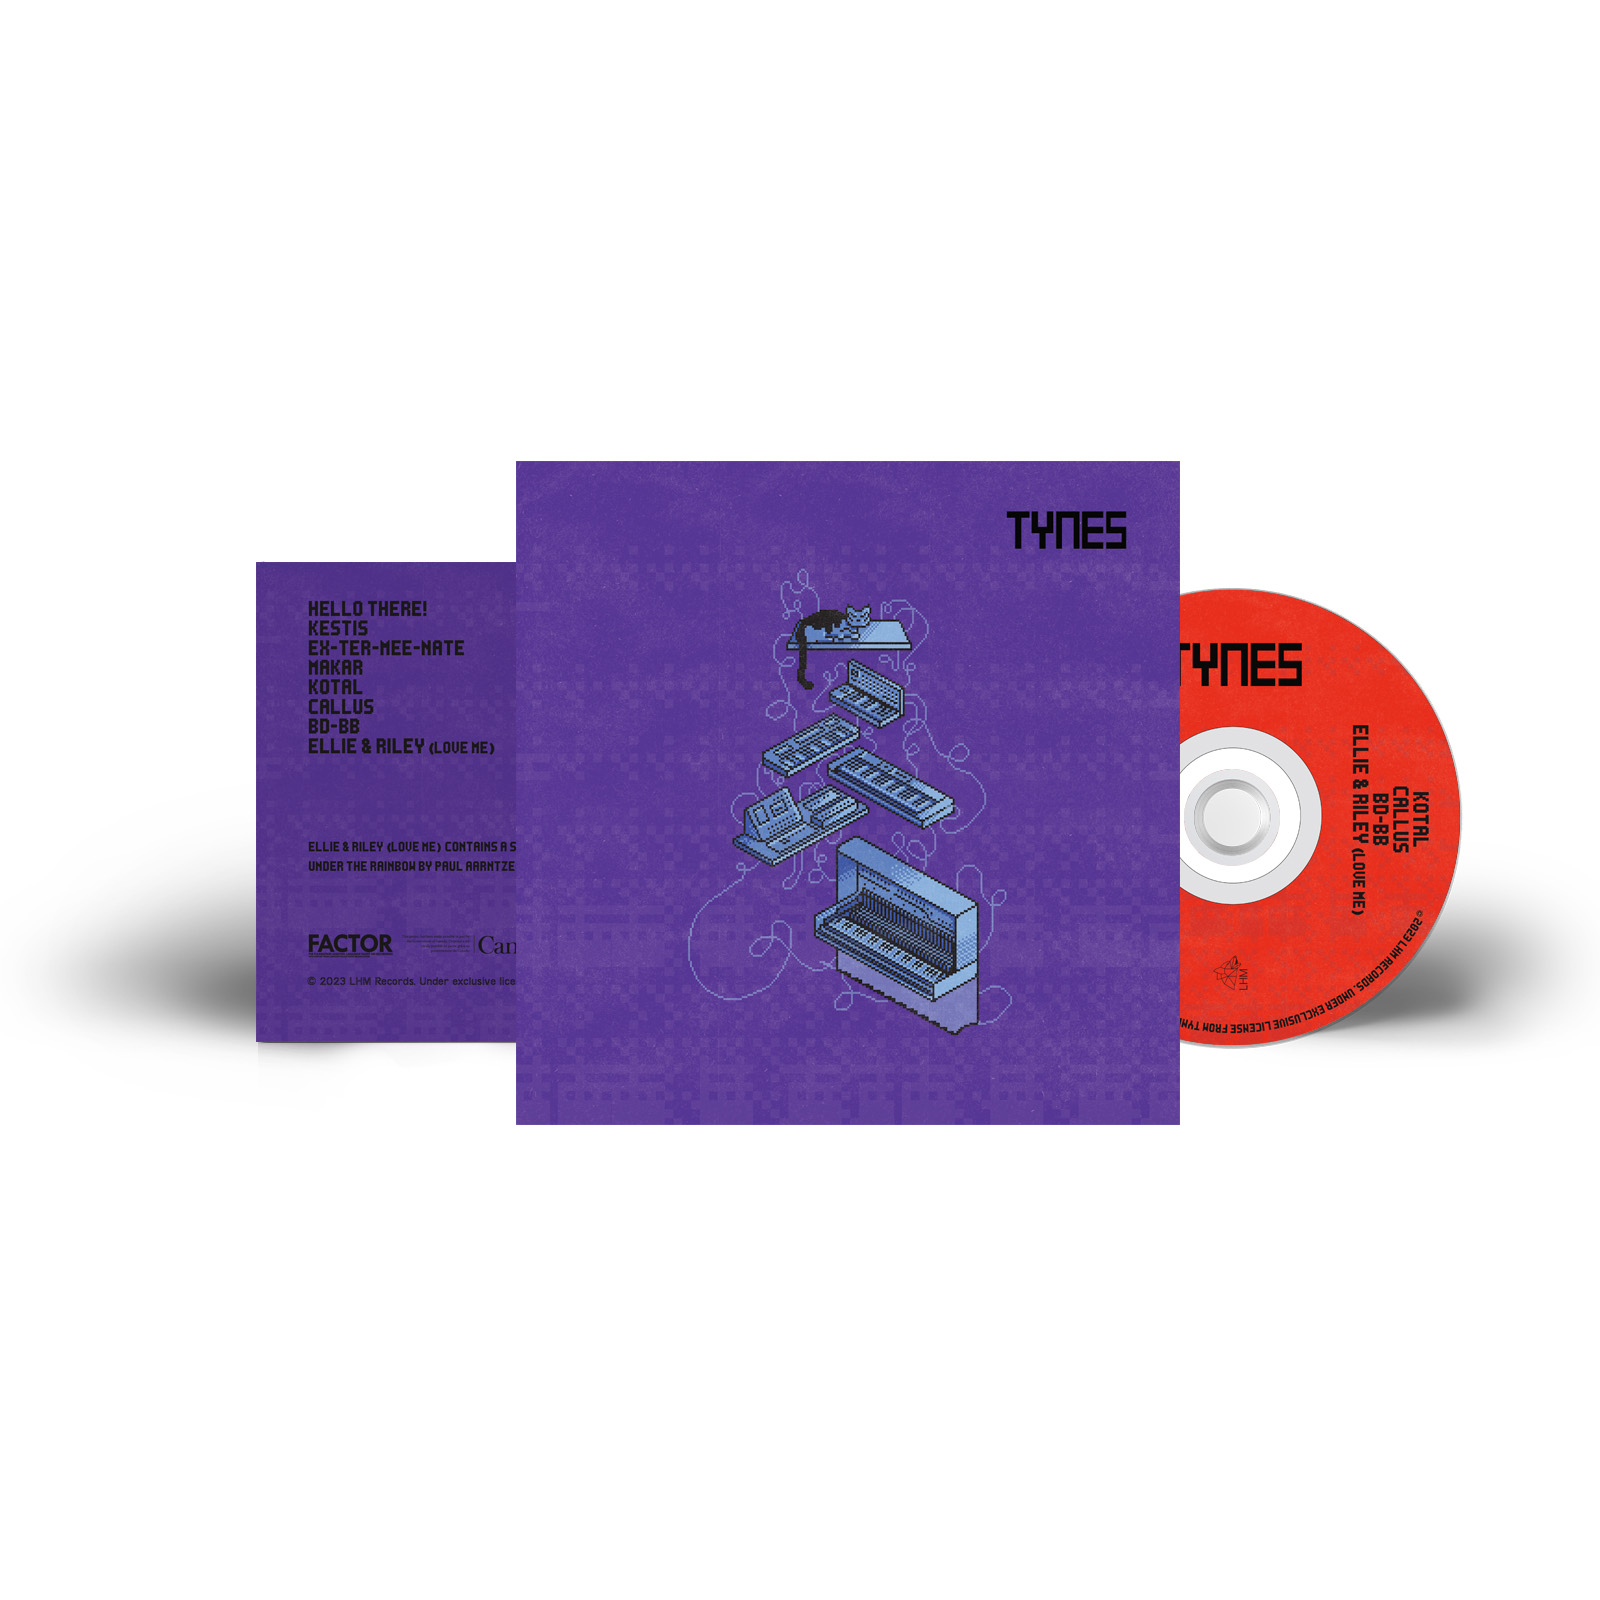 TYNES - TYNES CD